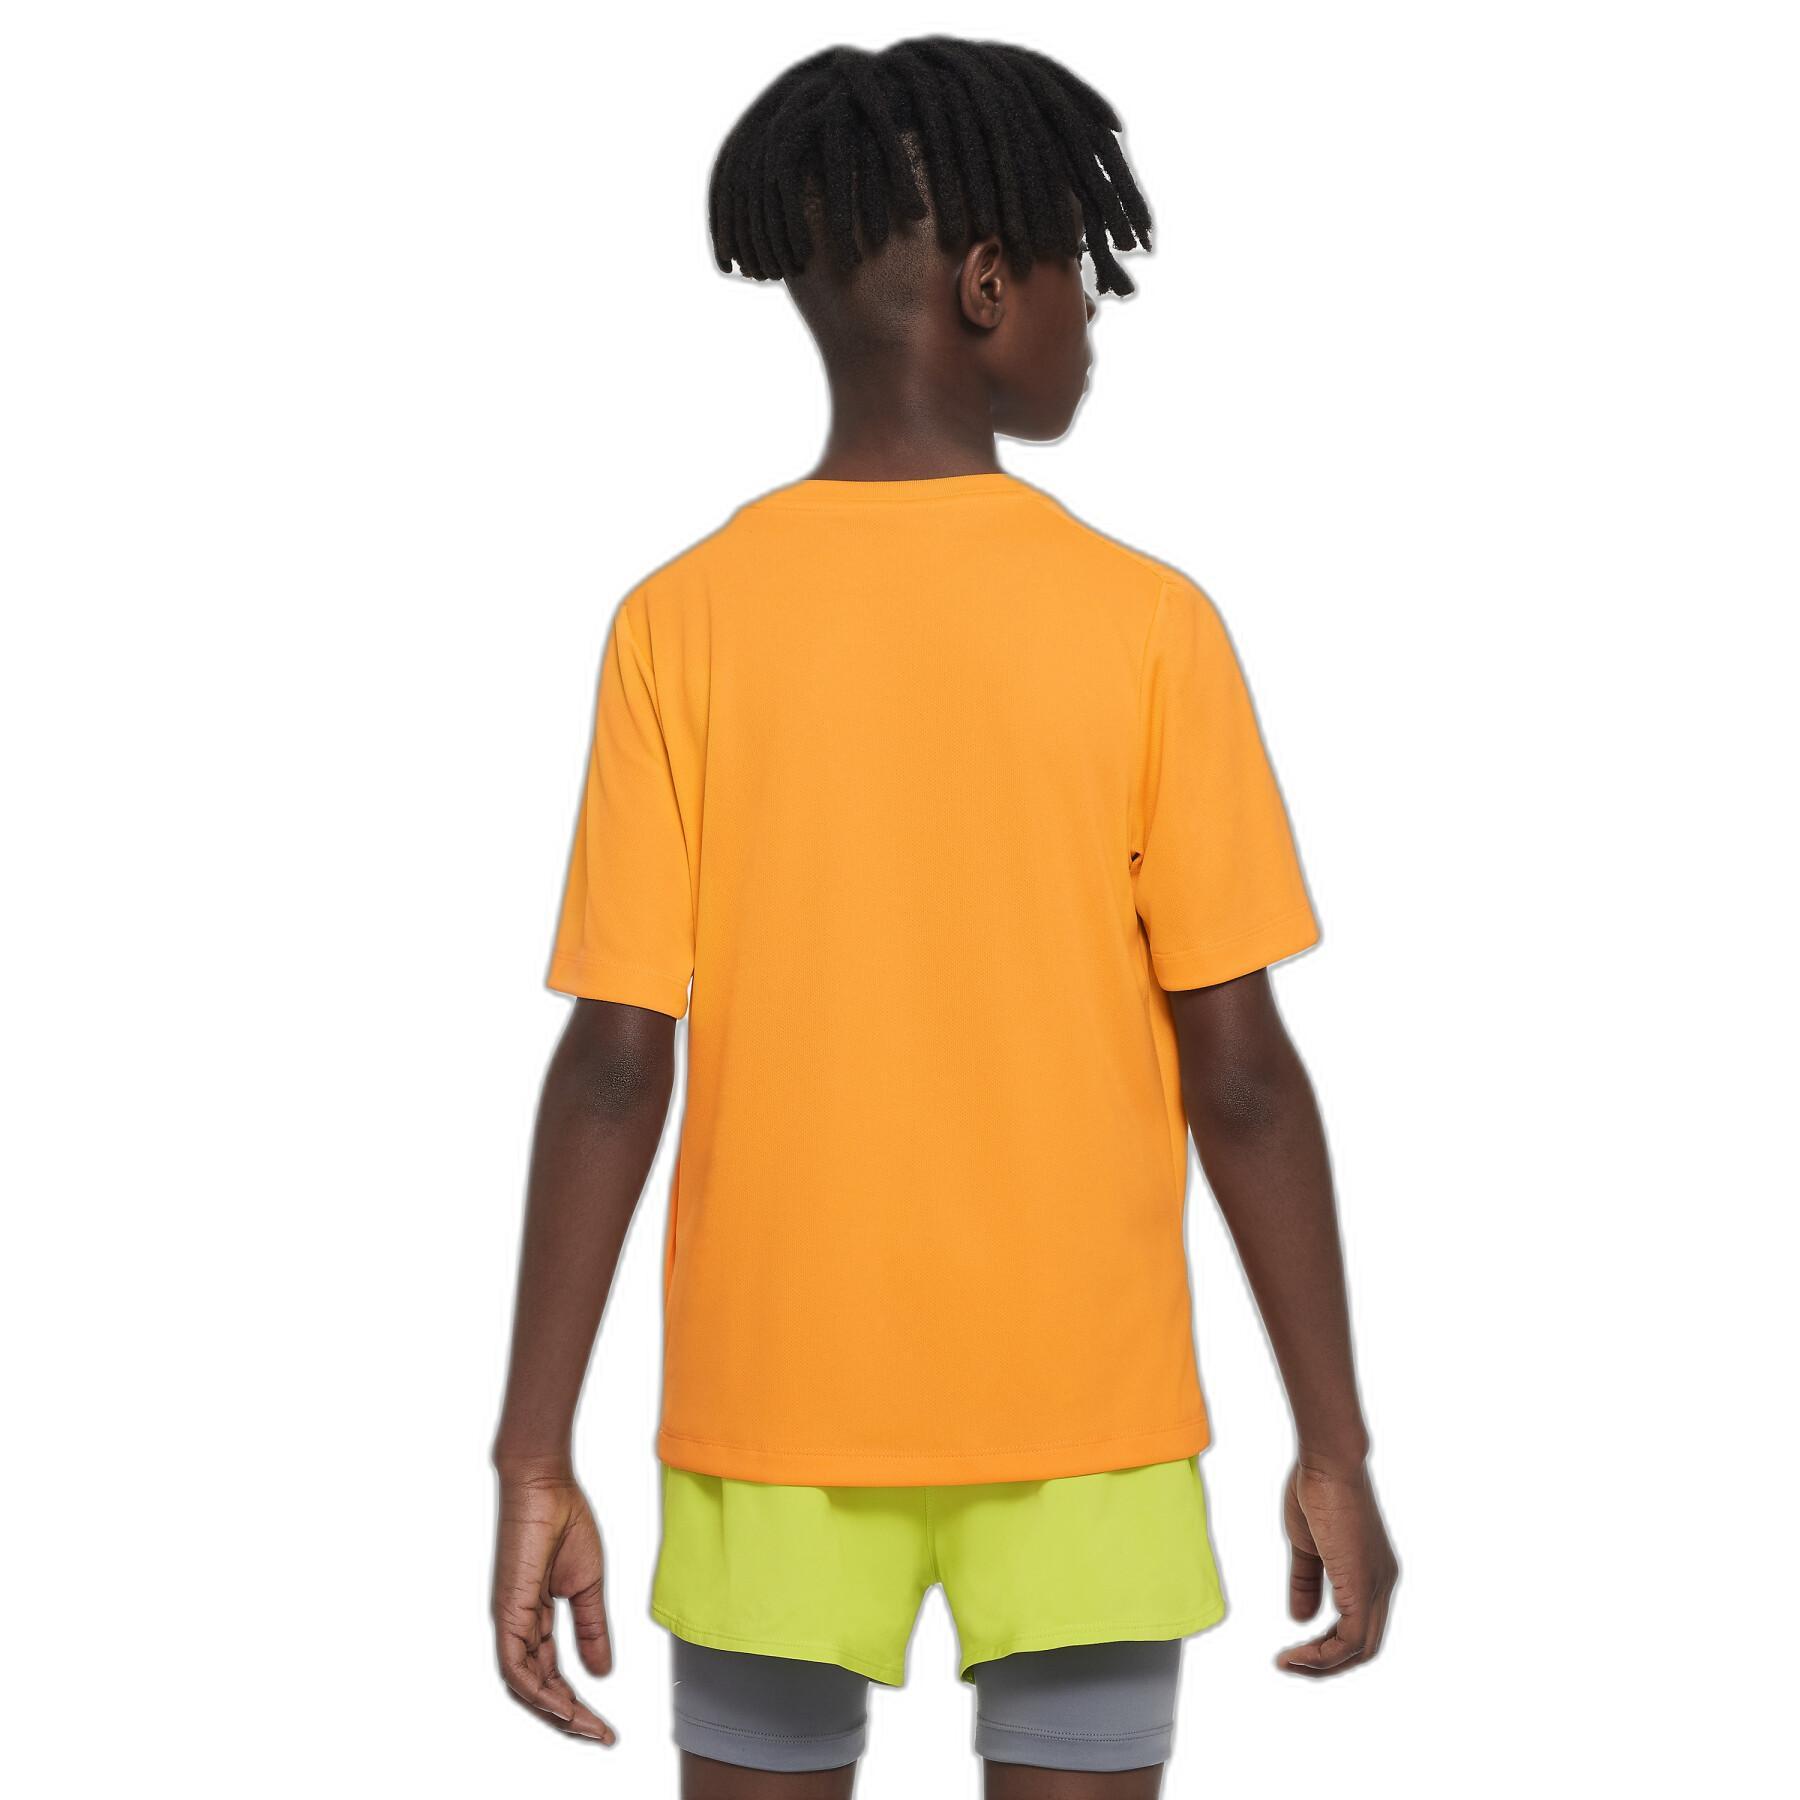 Children's jersey Nike Dri-FIT Multi+ HBR